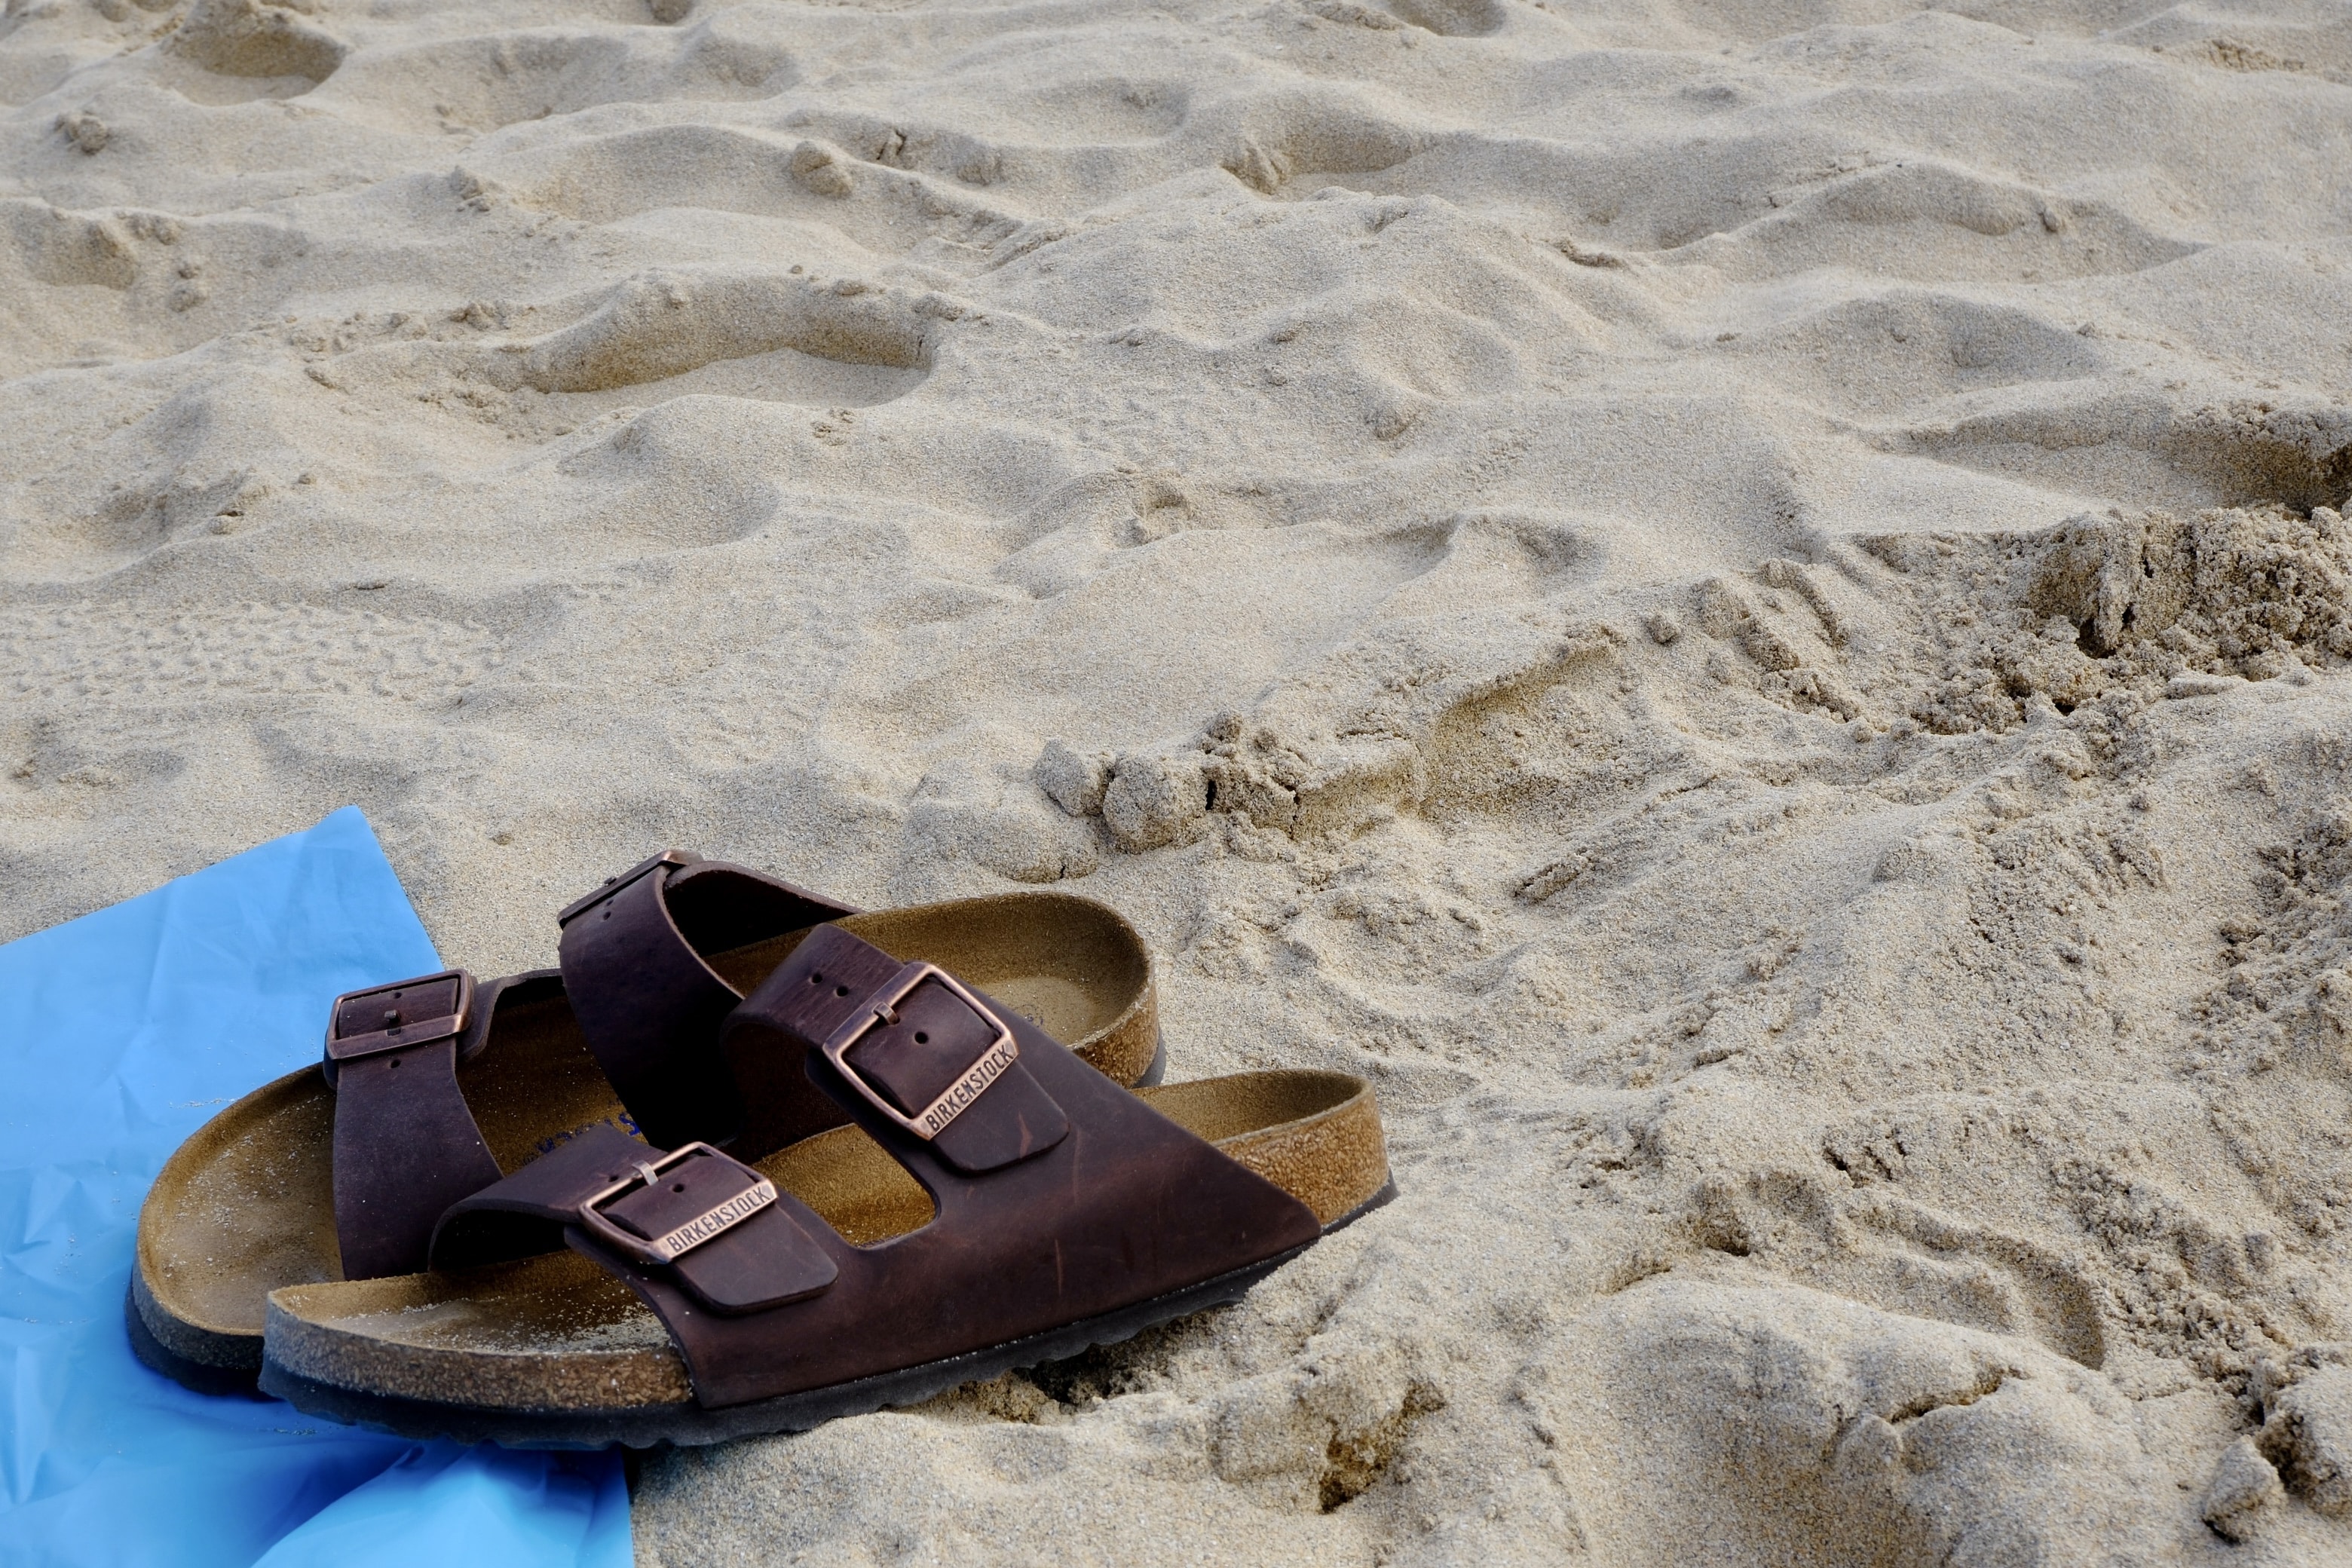 Birkenstock sandals on a beach